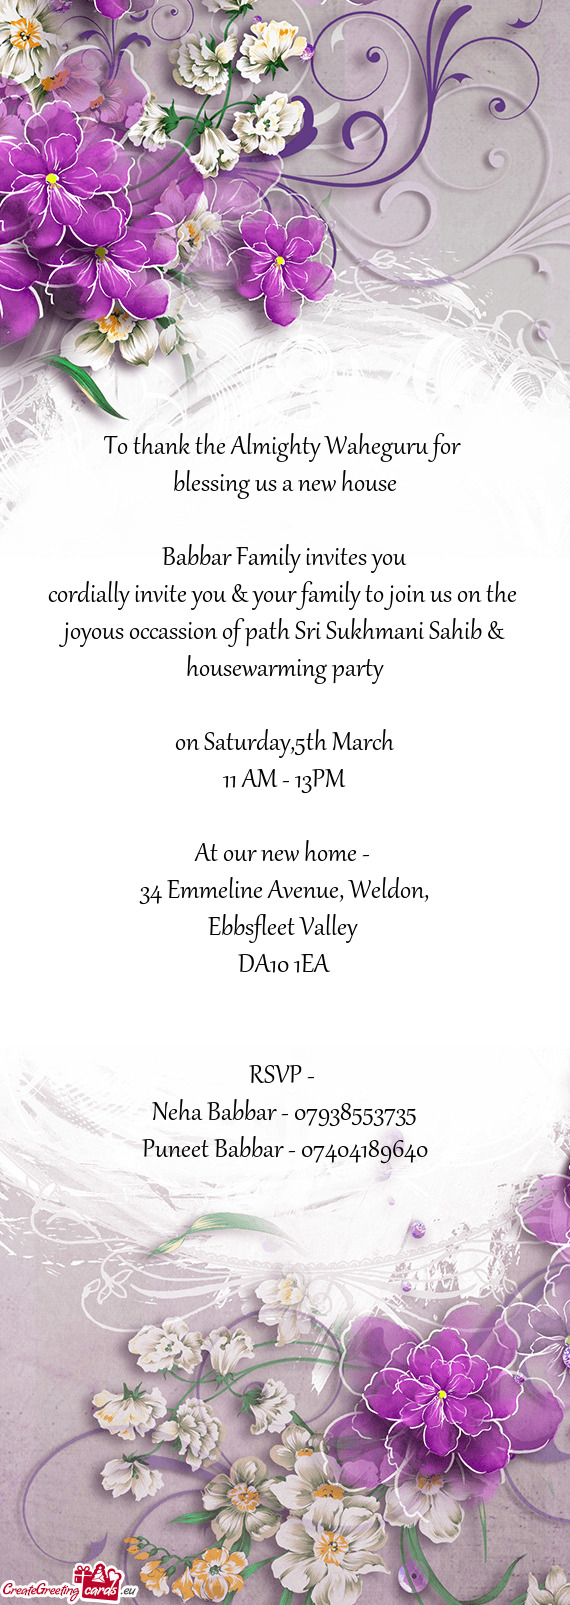 Babbar Family invites you